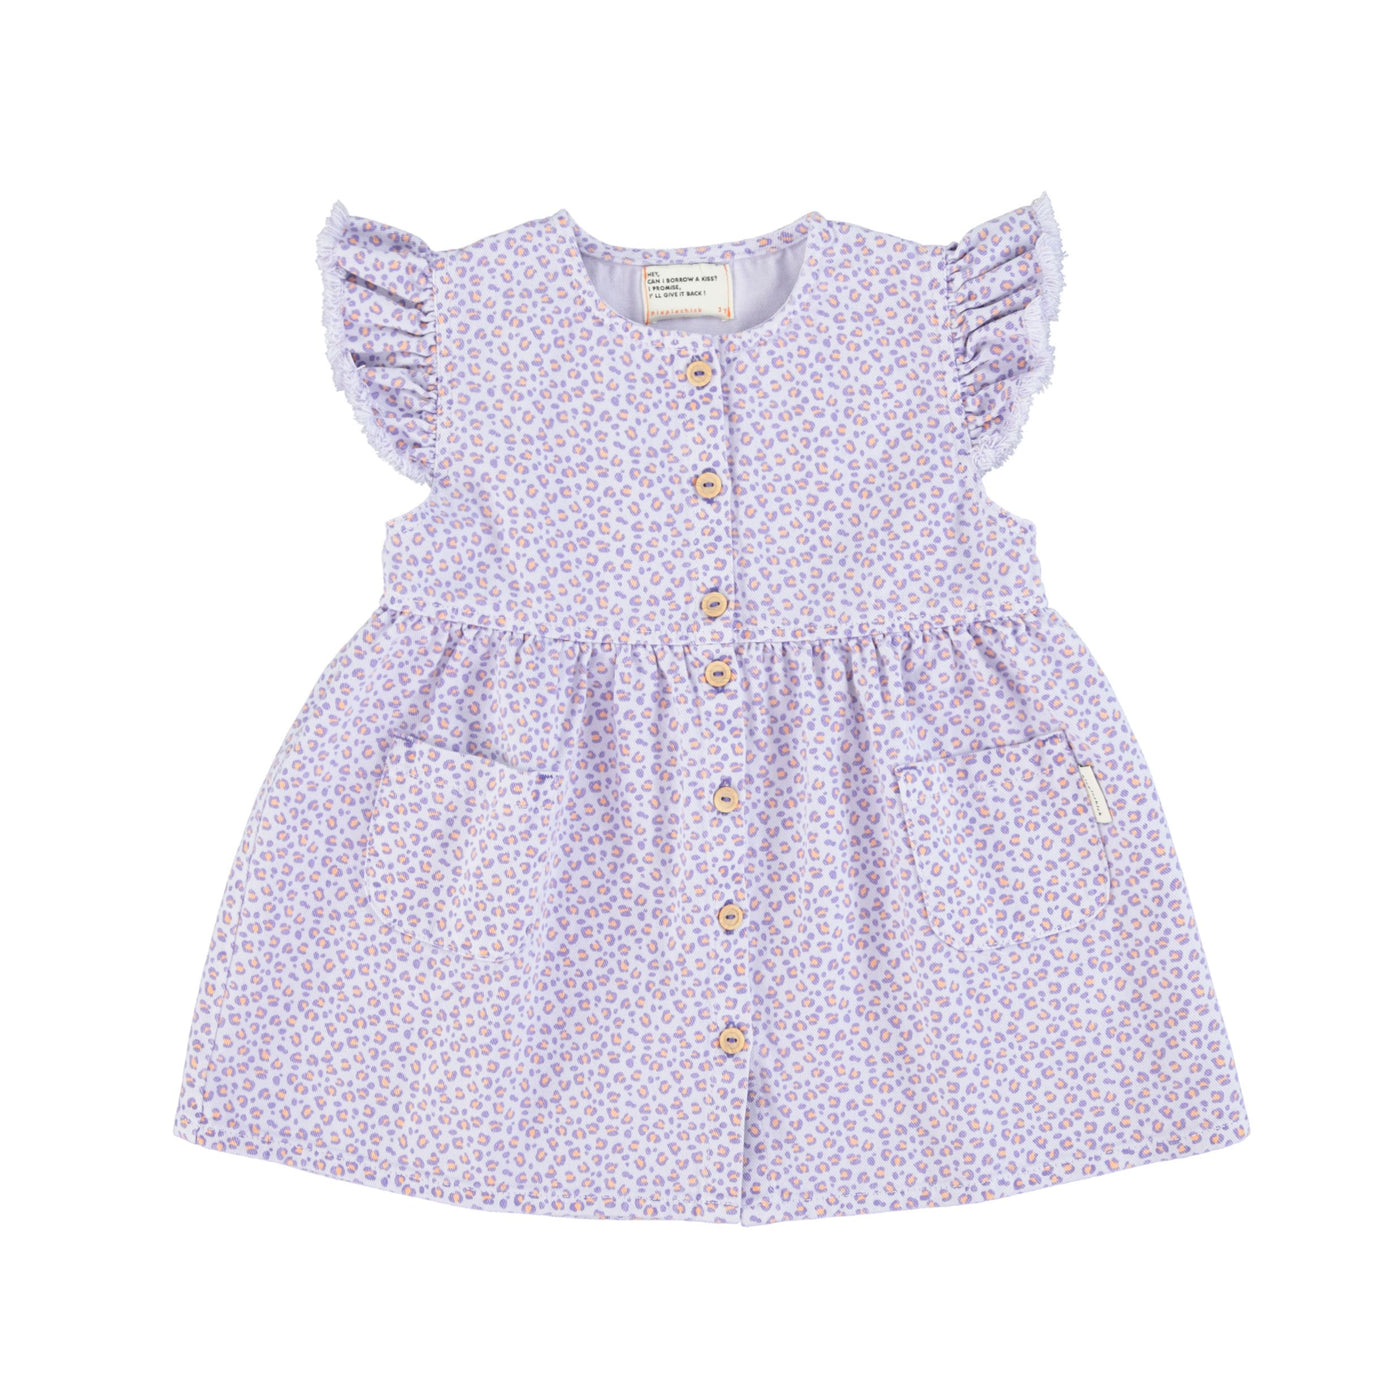 Piupiuchick short dress w/ ruffles on shoulders lavender w/ animal print